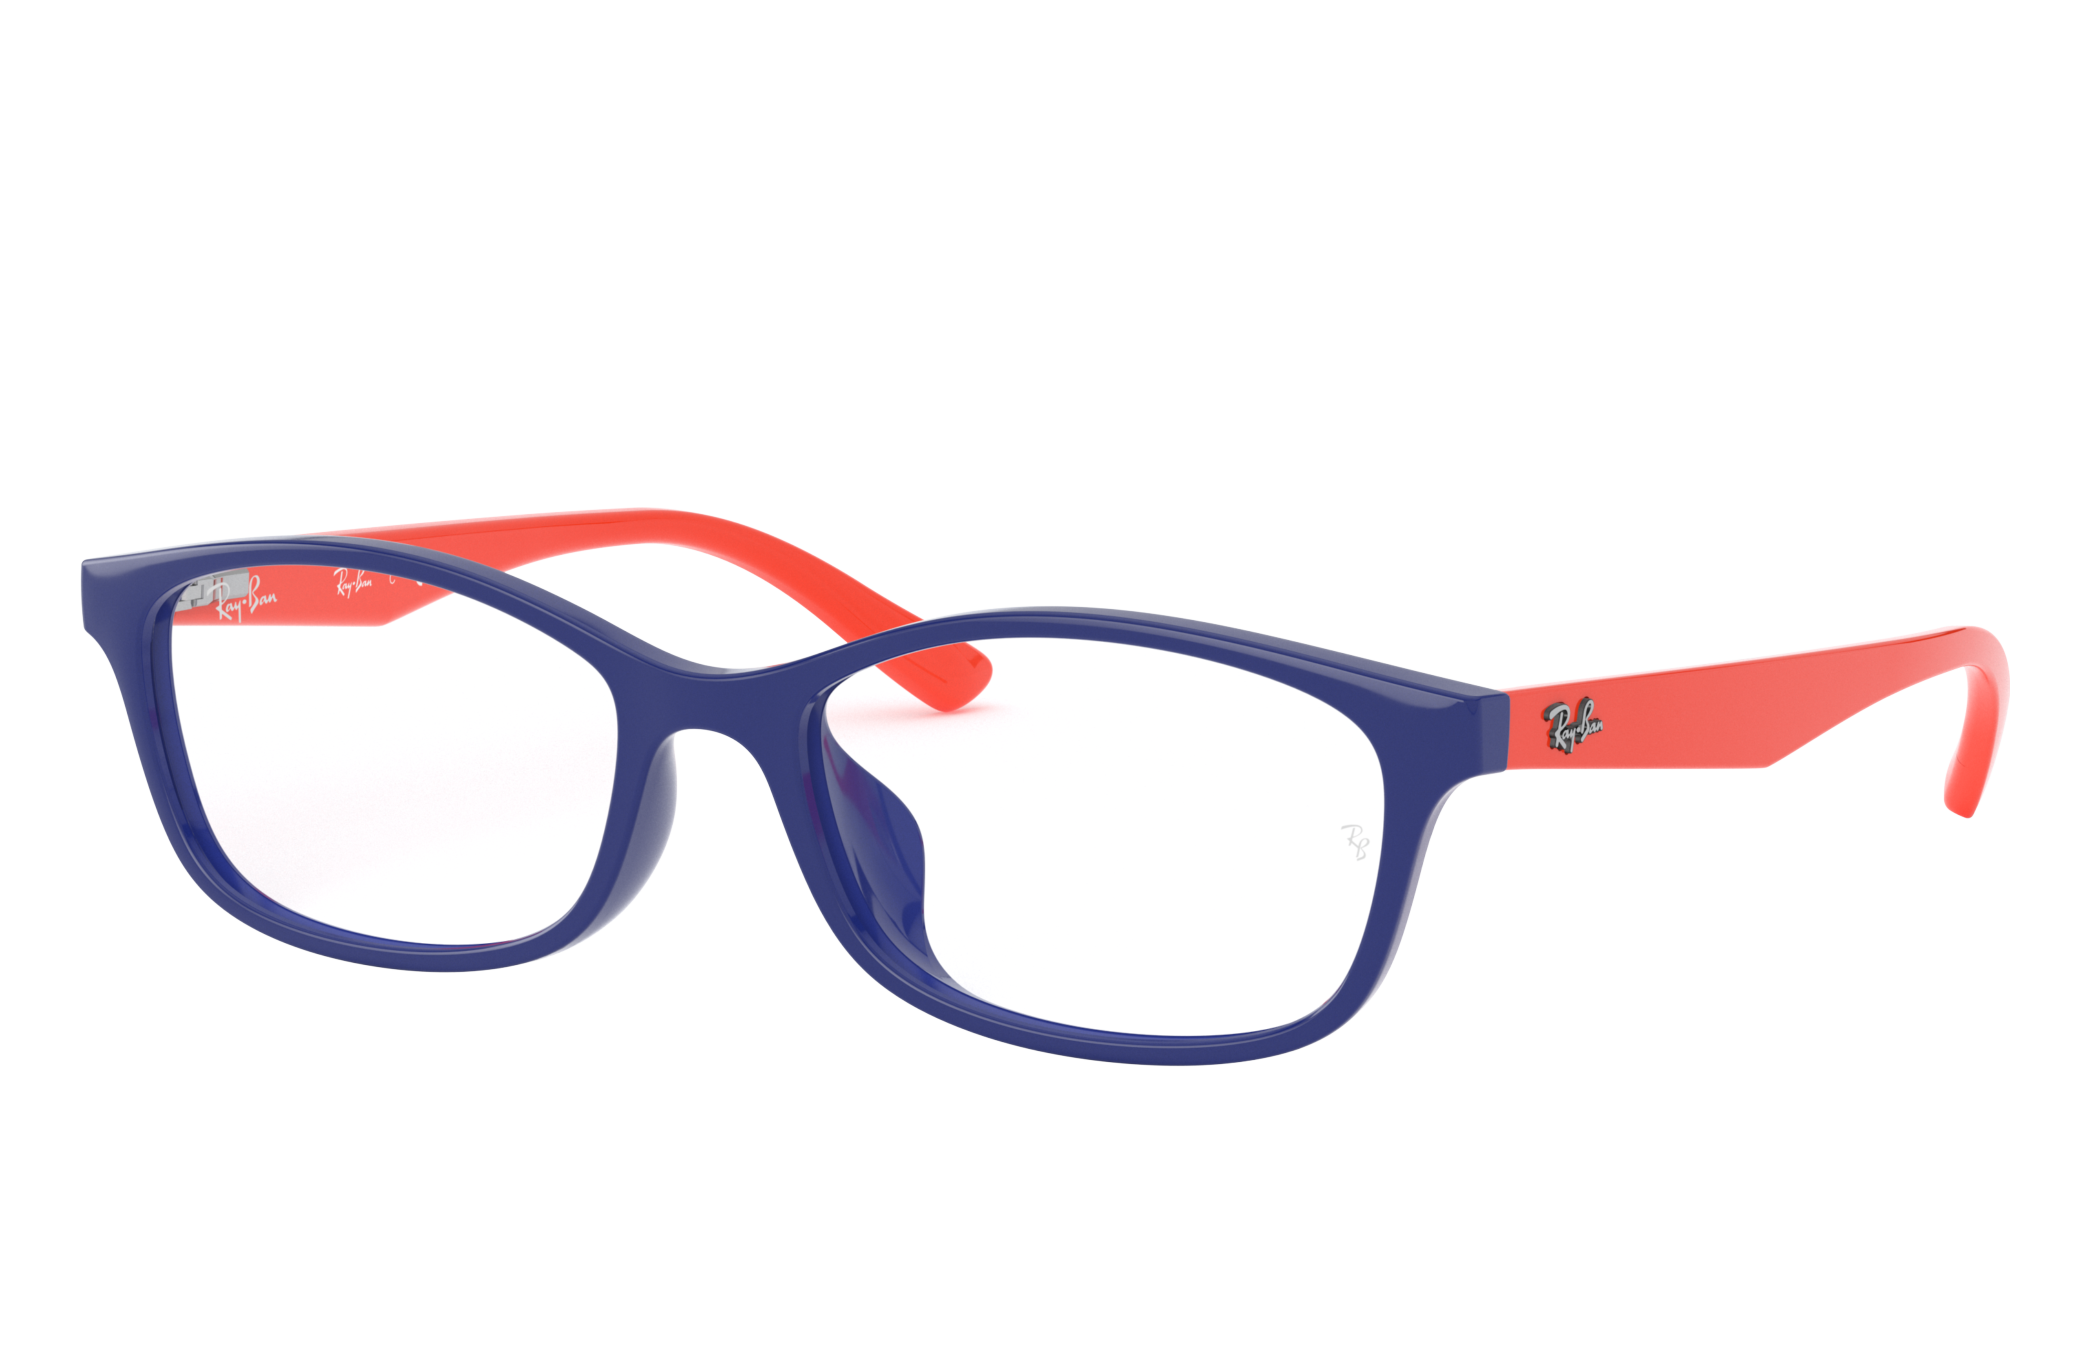 Rb1568 Optics Kids Eyeglasses with Blue Frame - RY1568D | Ray-Ban®